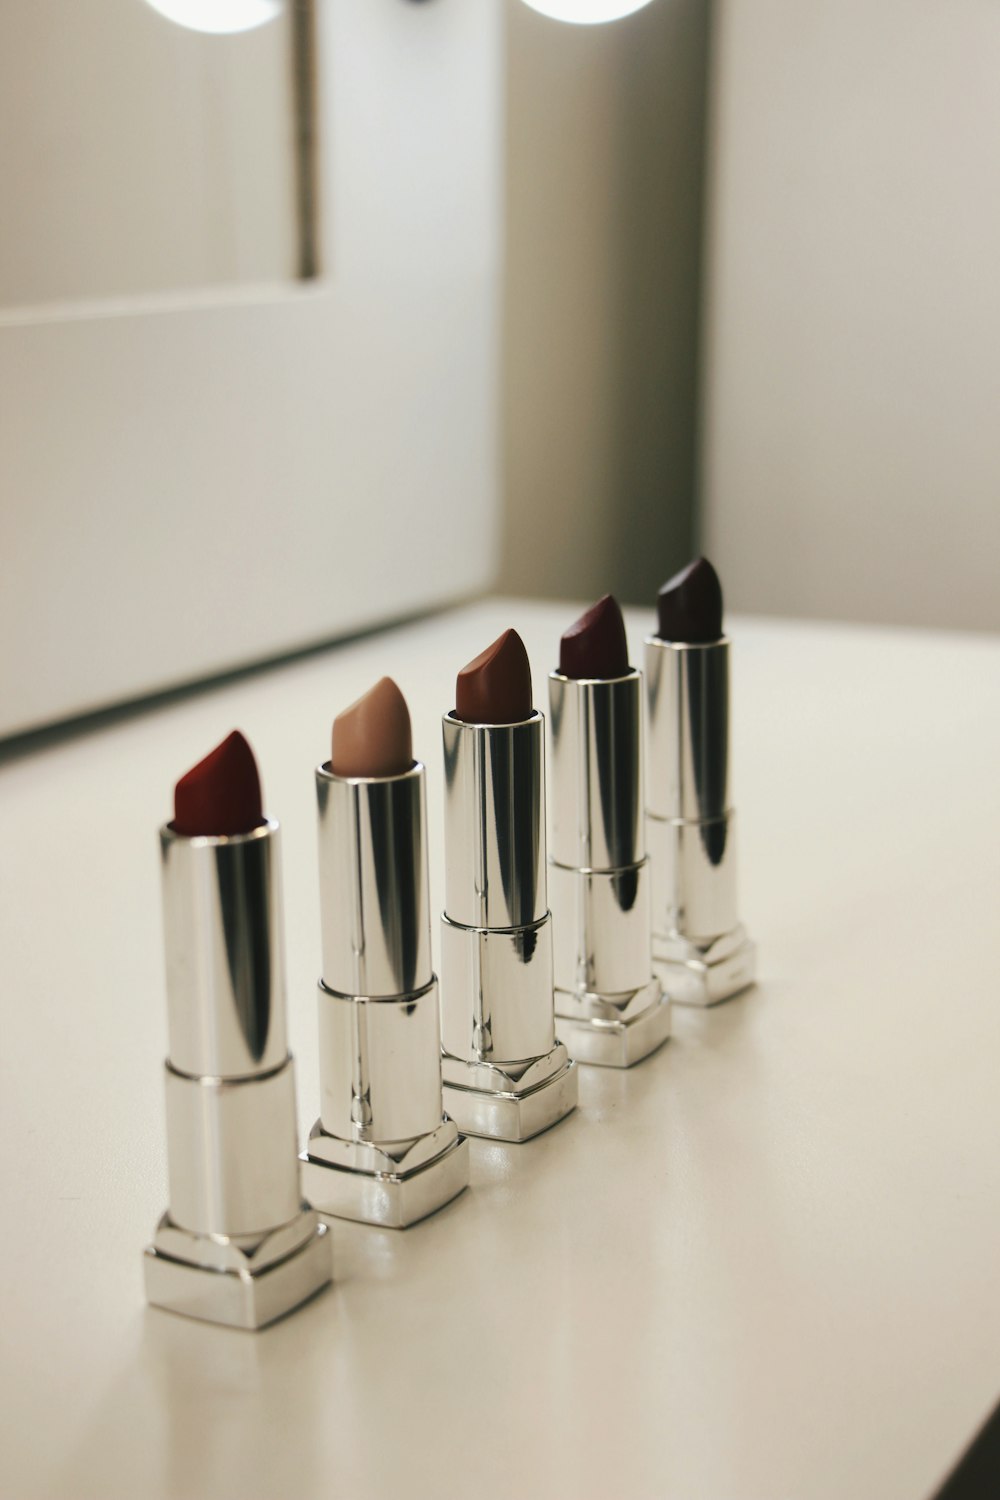 five assorted-color lipsticks